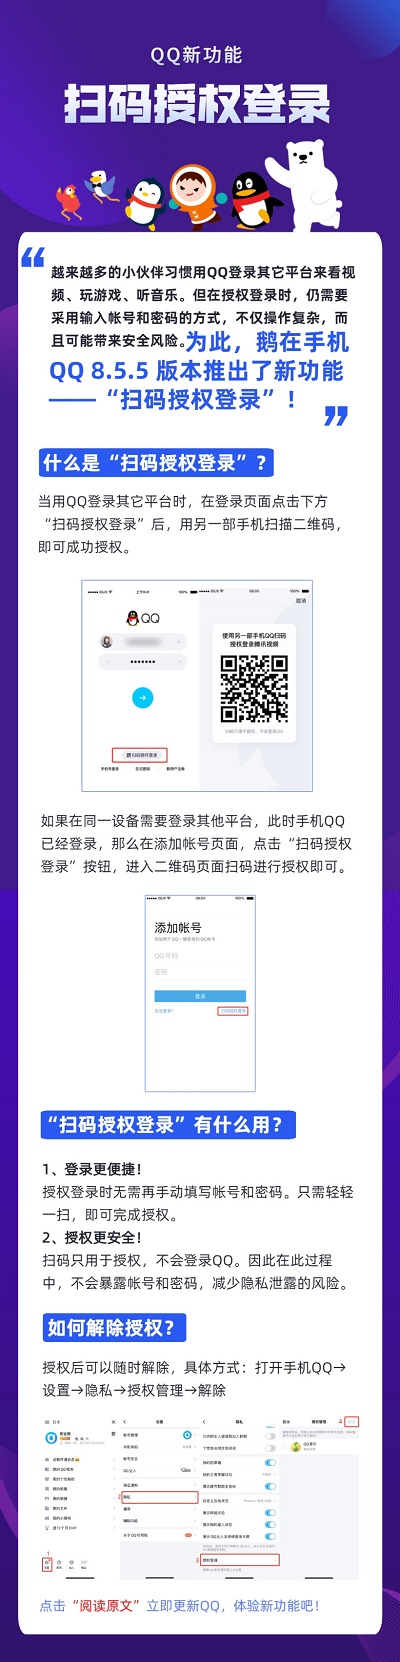 QQ上线“扫码授权登录”新功能：再也不用填写帐号和密码了